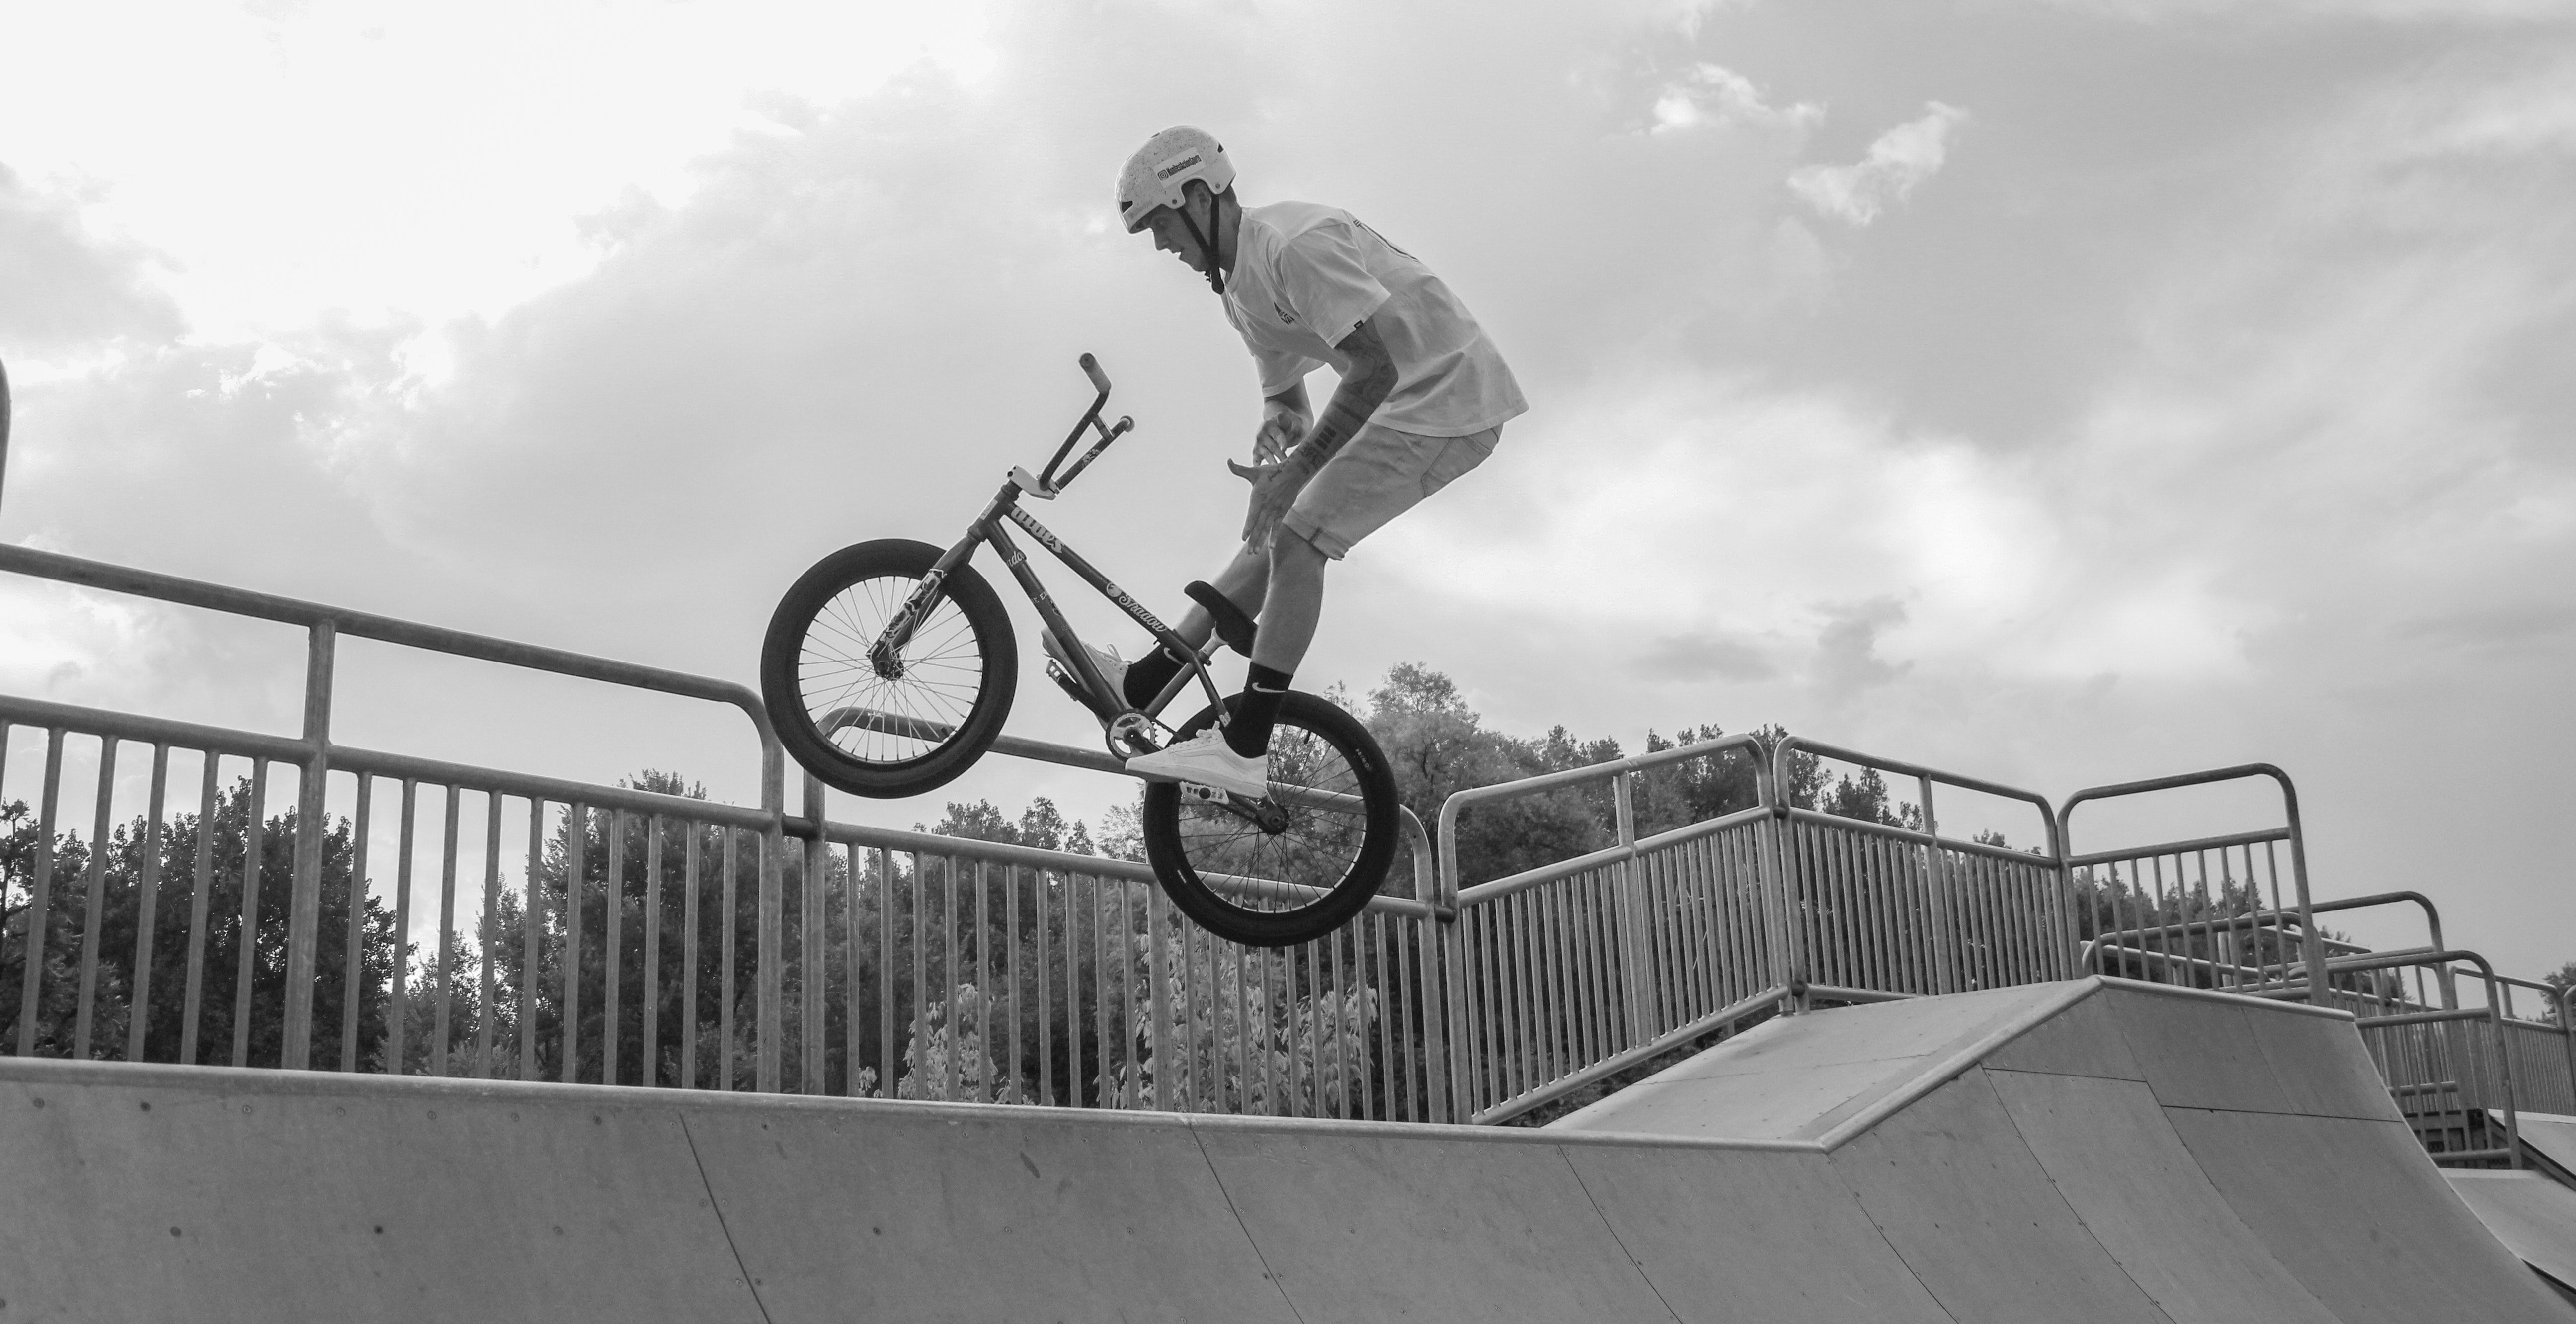 A man performs a BMX bike trick on a ramp